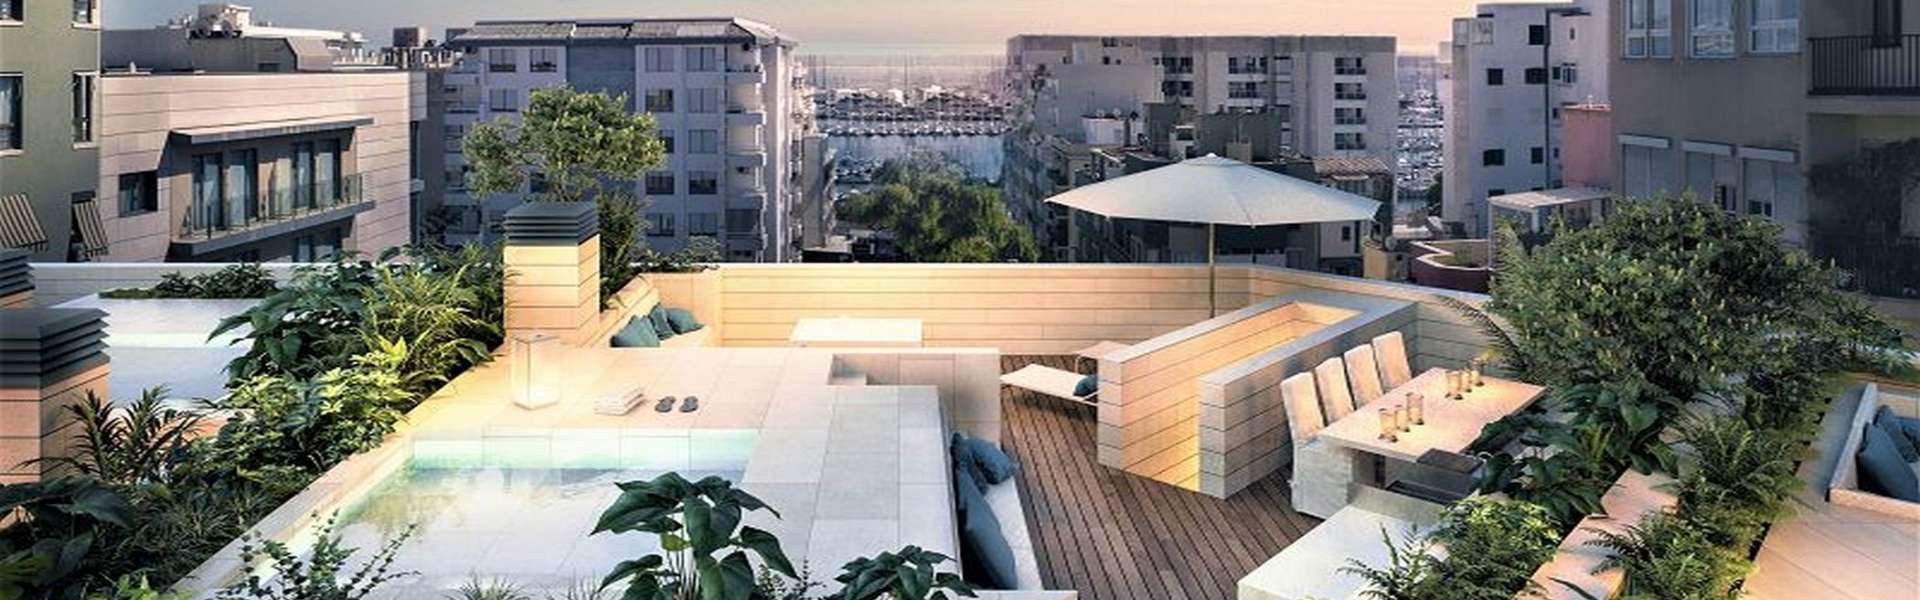 Palma/Santa Catalina - Penthäuser & Neubau Apartments in Top-Lage